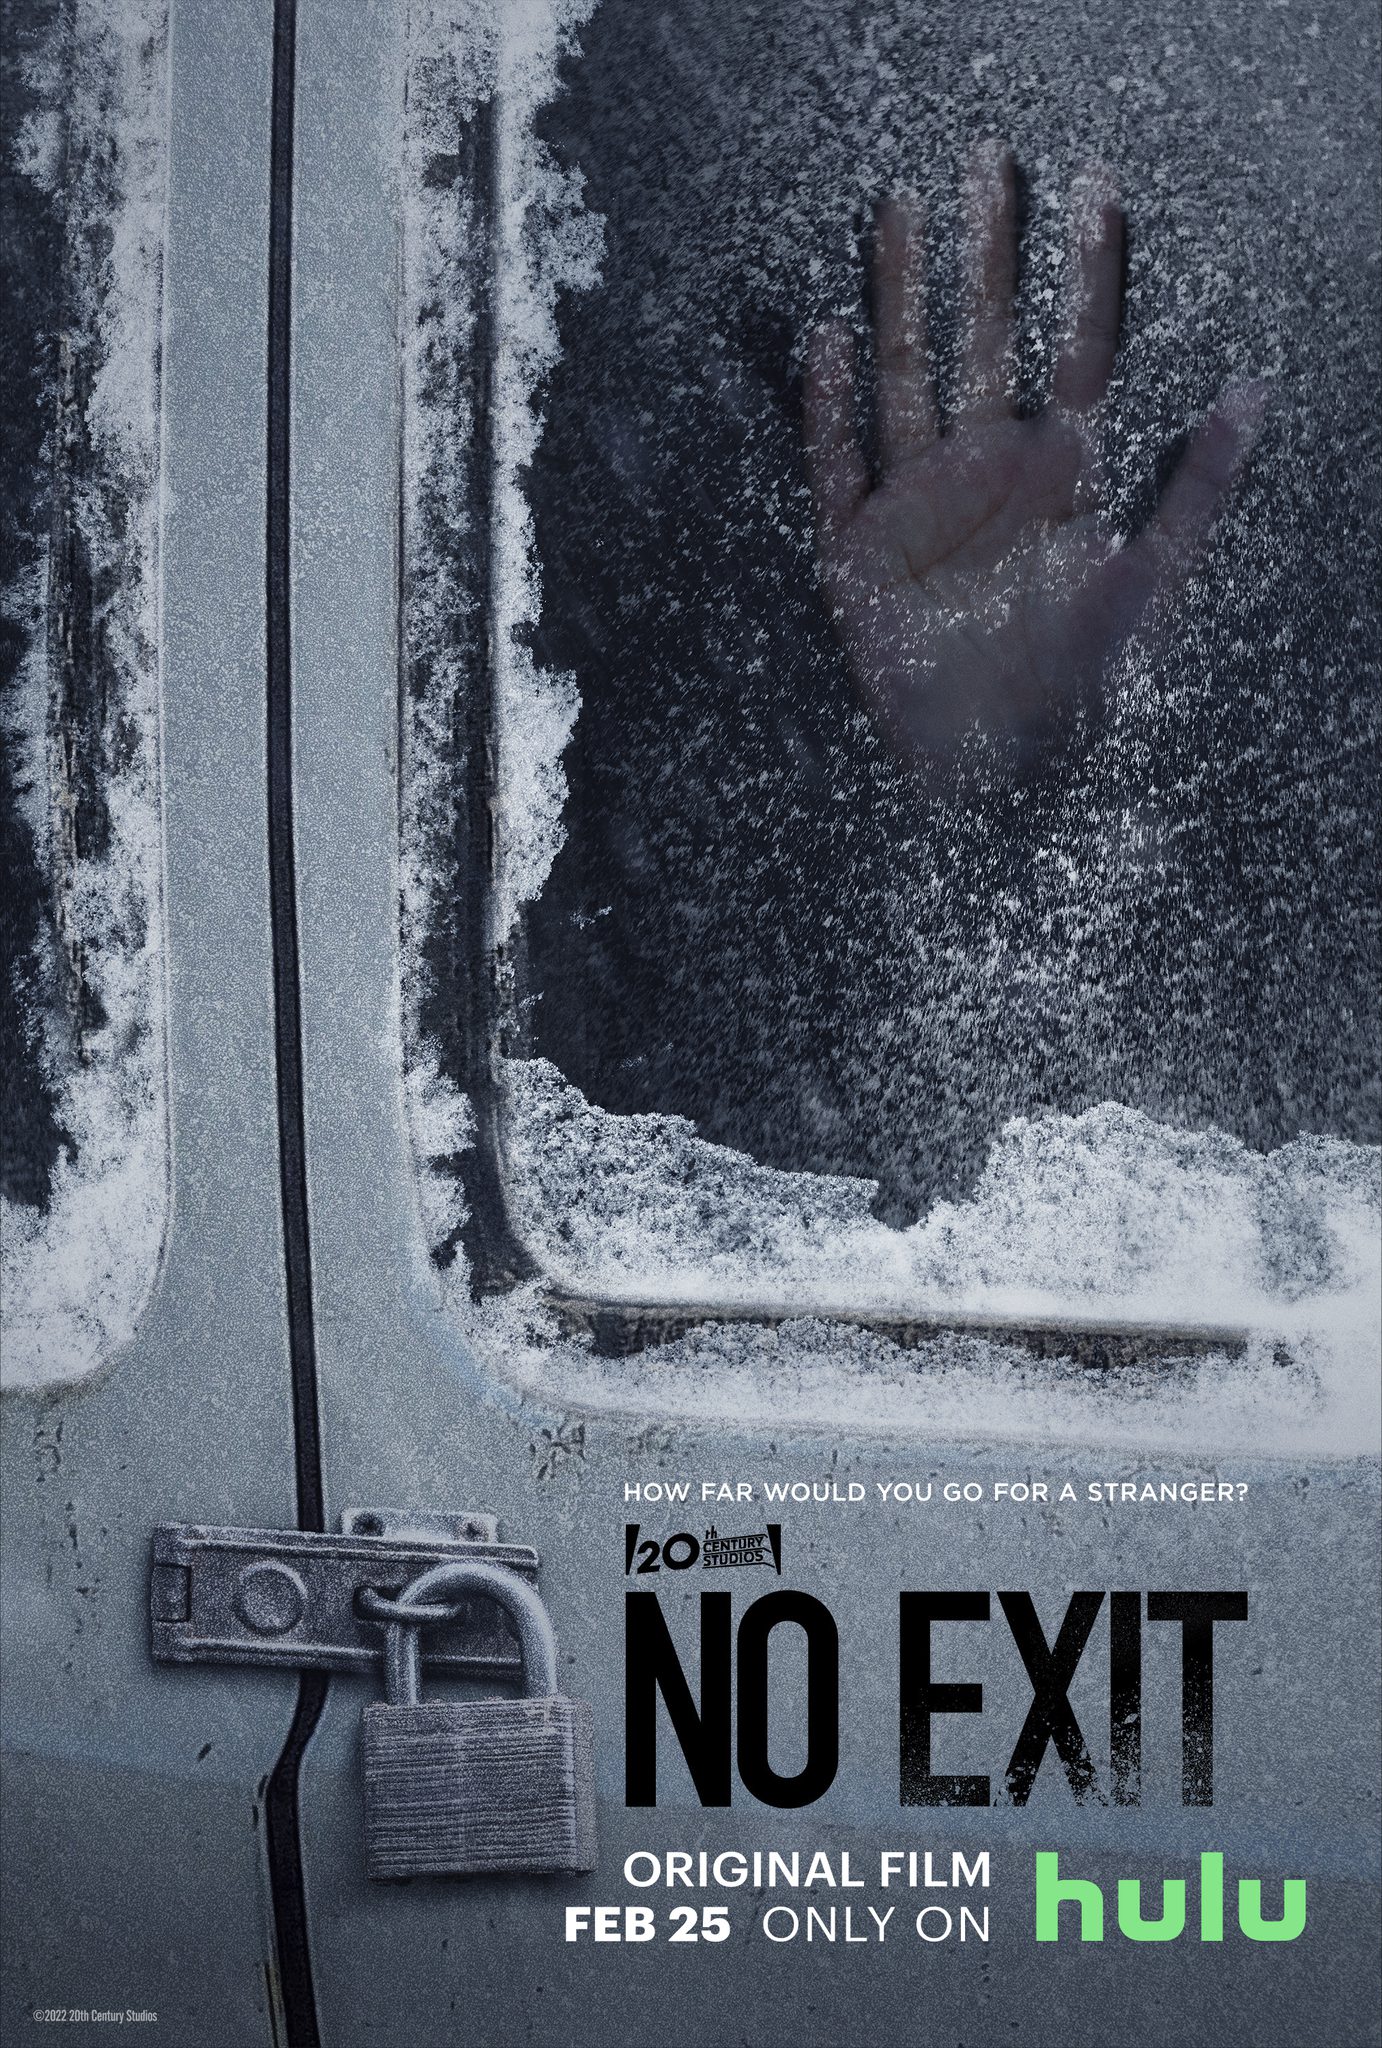 Disney Unveils Trailer For New Thriller “No Exit”